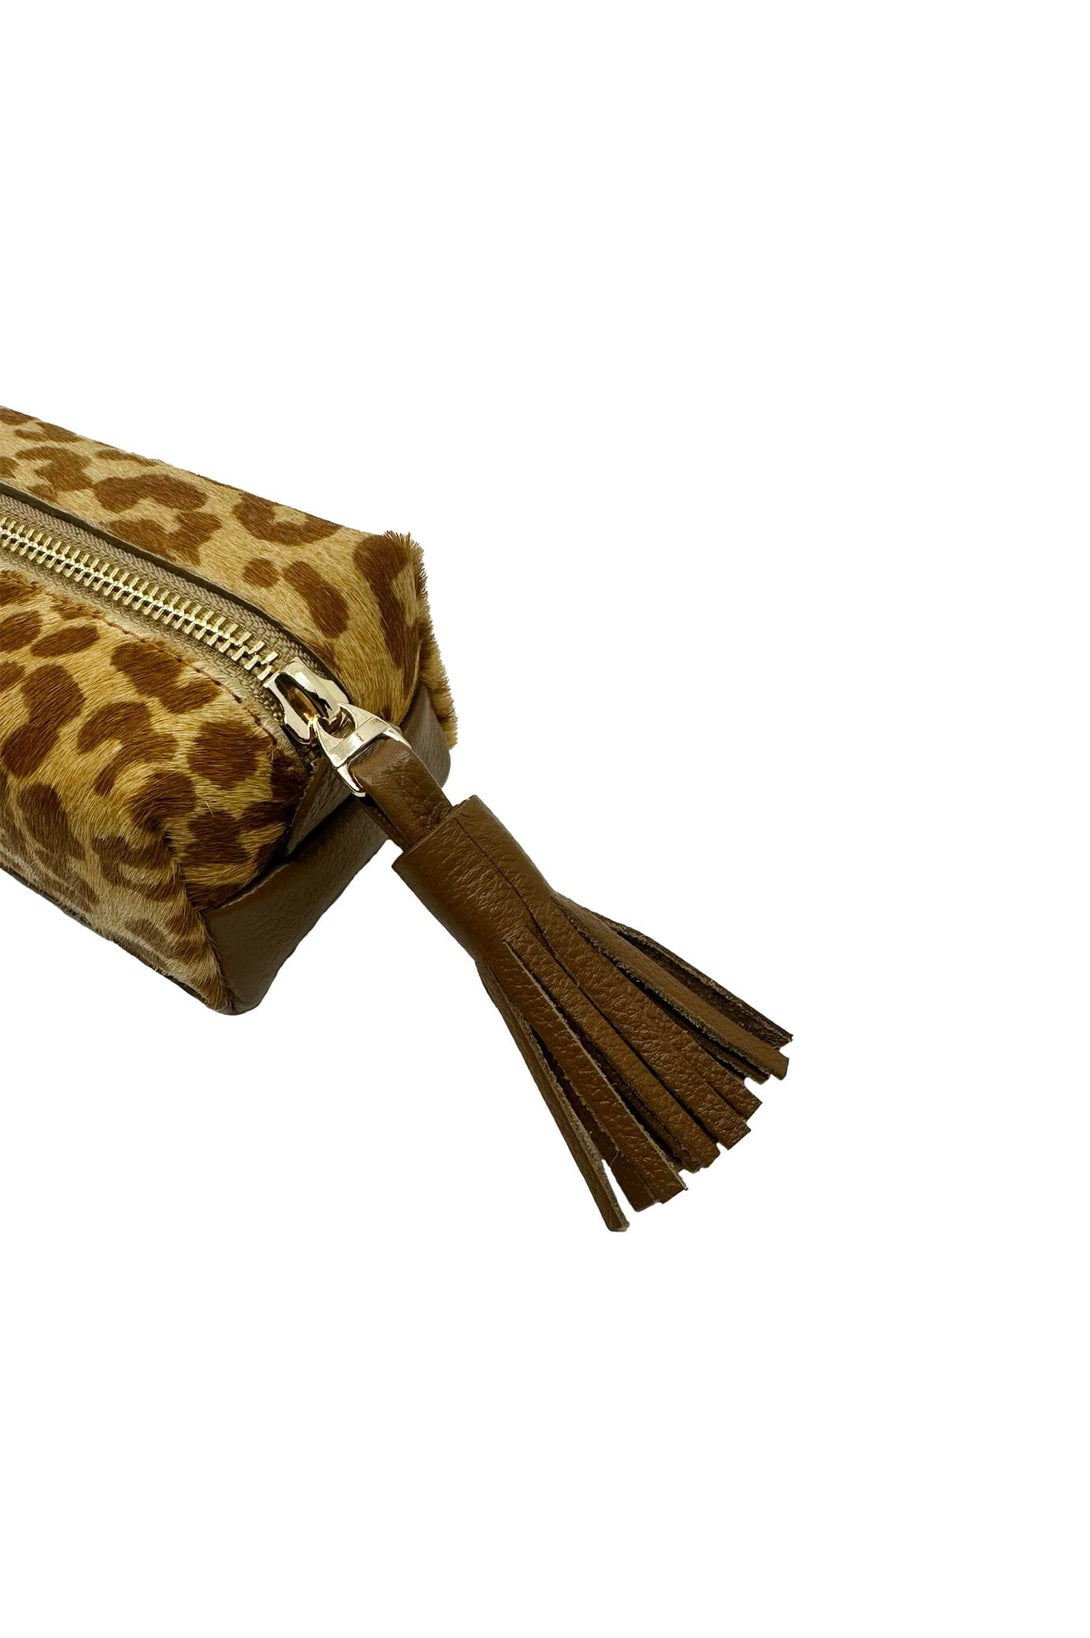 Make up Bag Tan Leopard Cowhide Leather